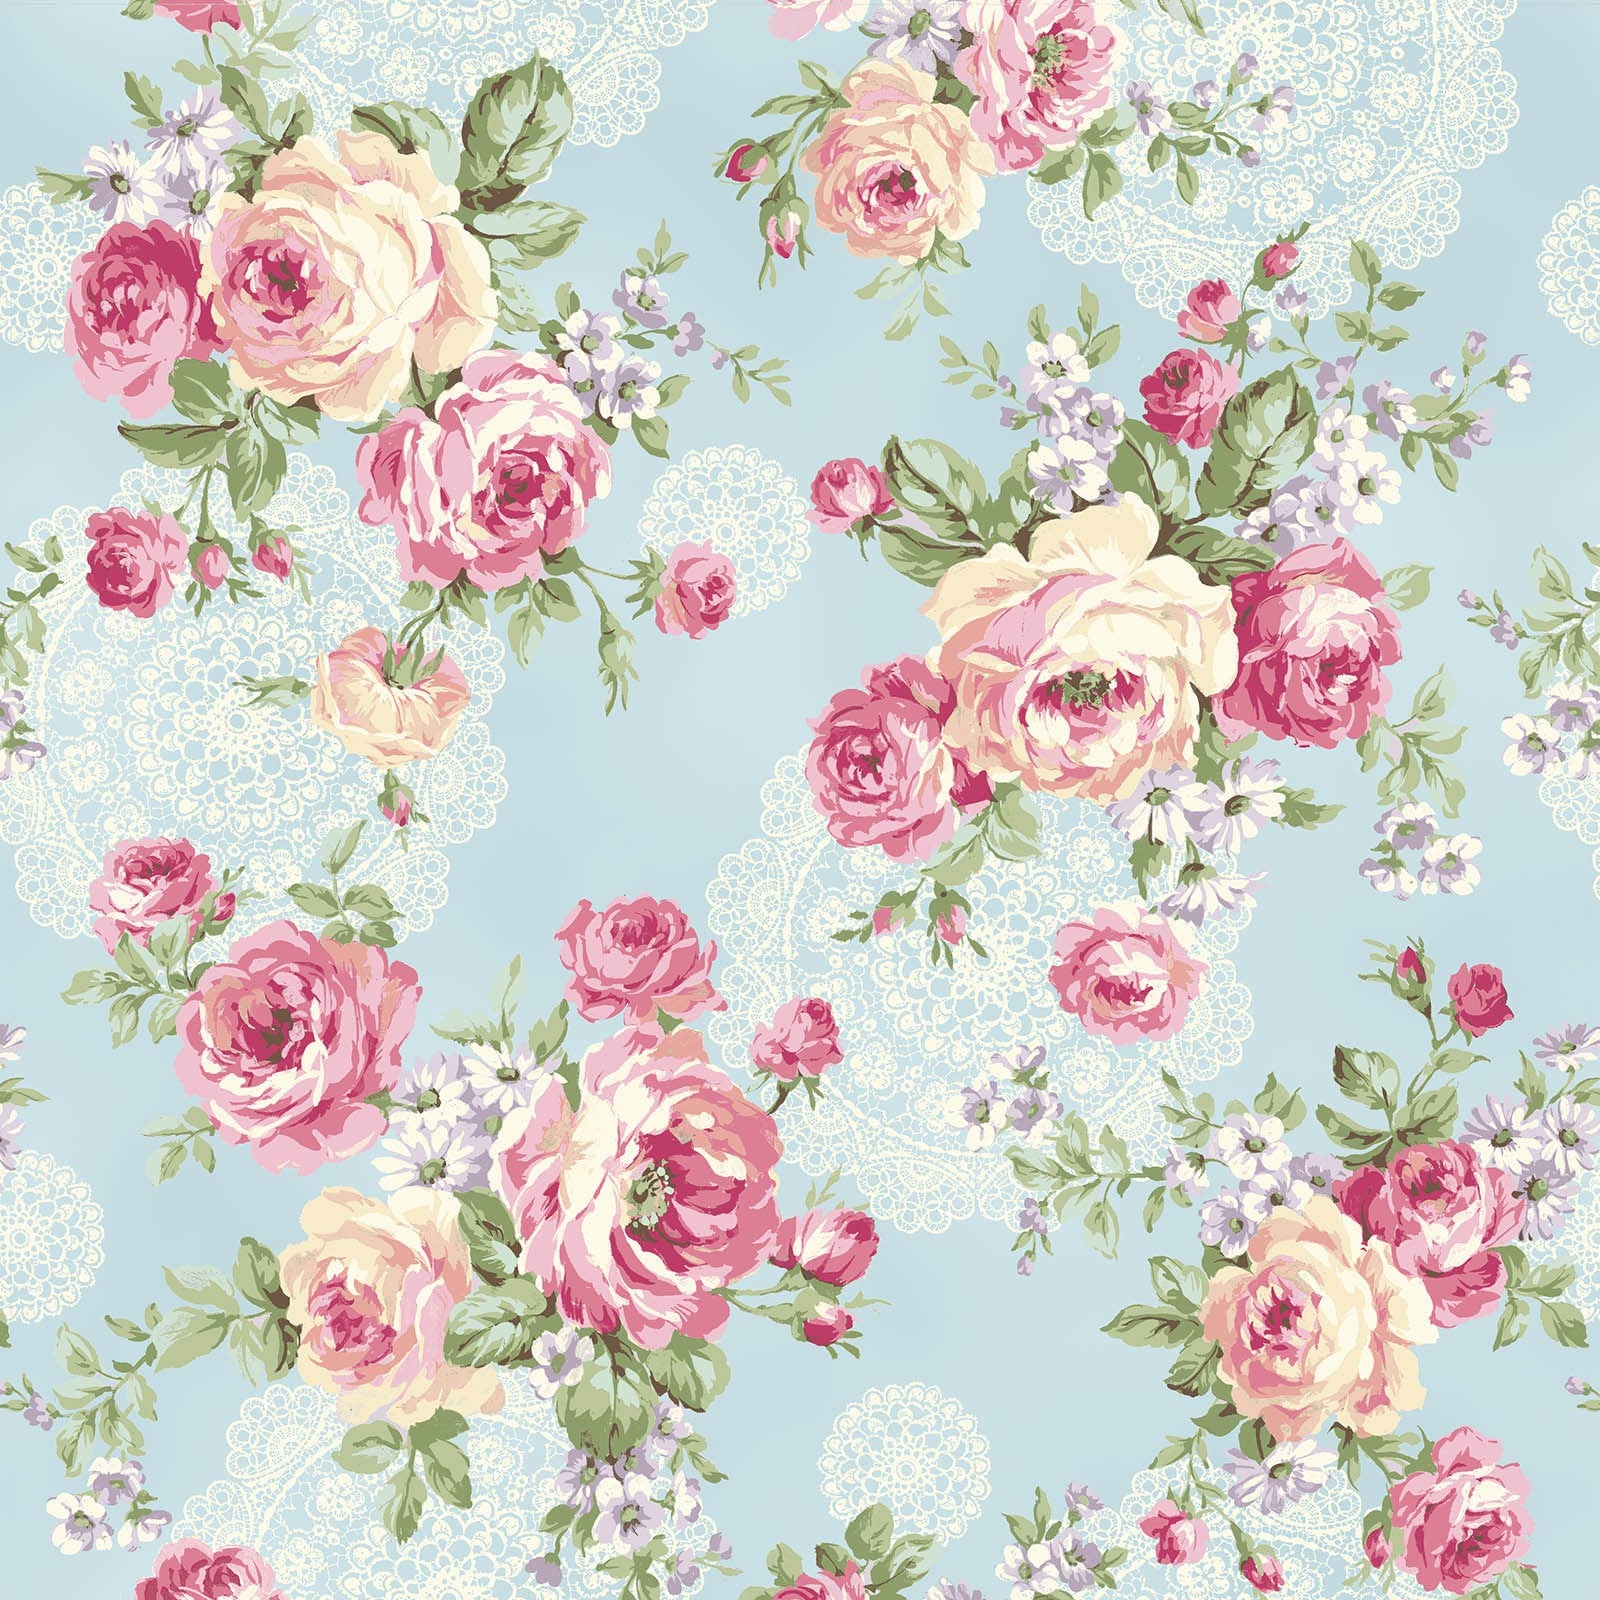 Rose Waltz RuRu Bouquet cotton fabric by Quilt Gate Ru2450-11D Roses on Blue